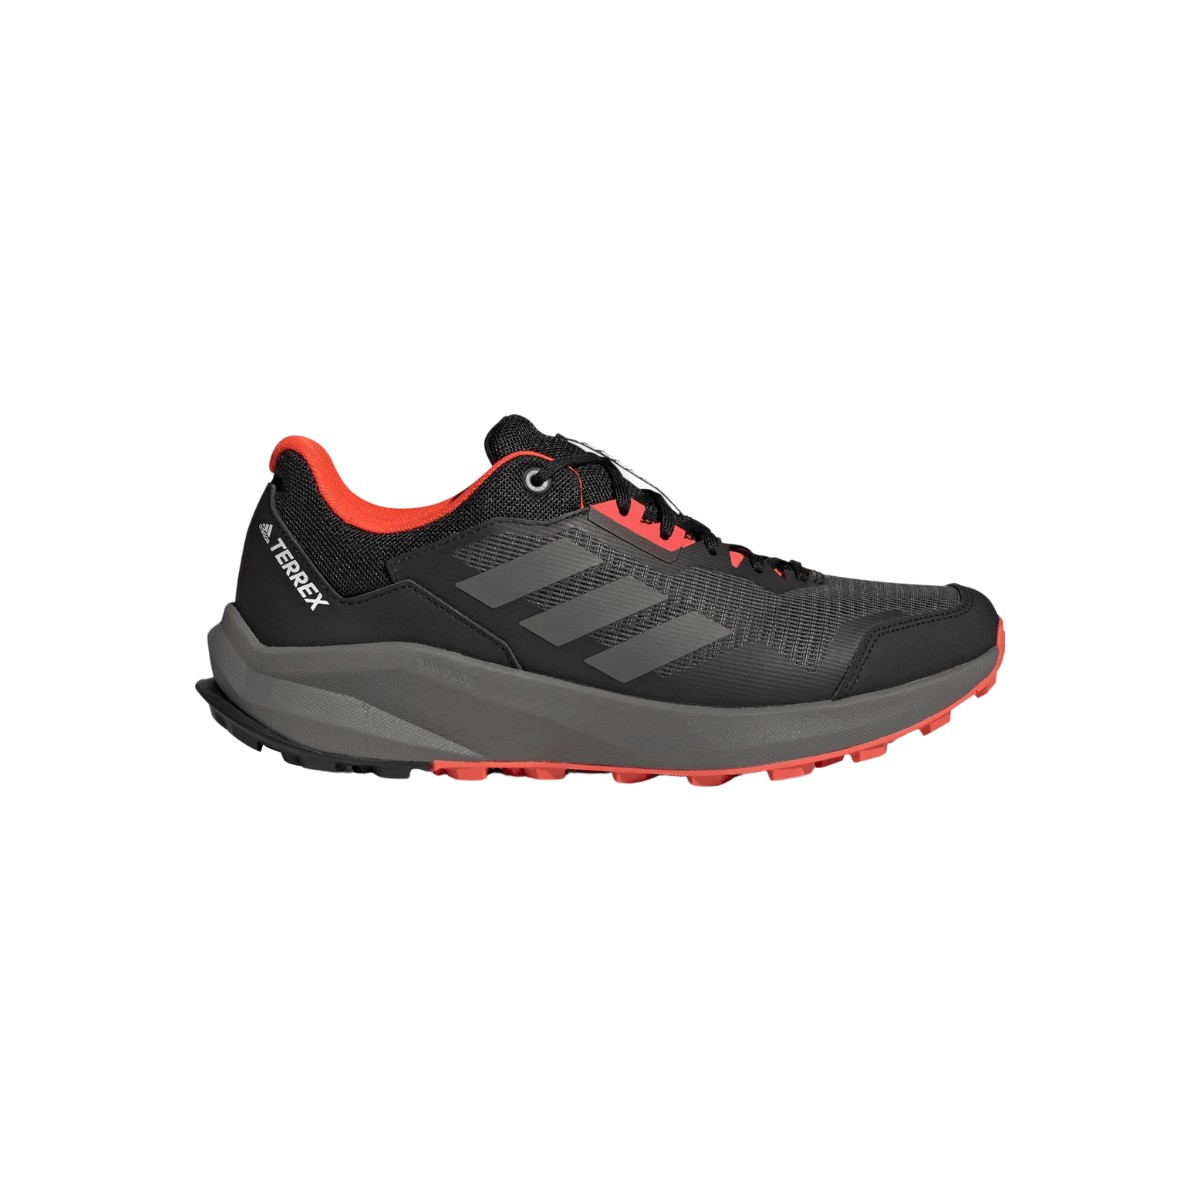 Shoes Adidas Terrex Trailrider Black Grey Red AW22, Size UK 7.5